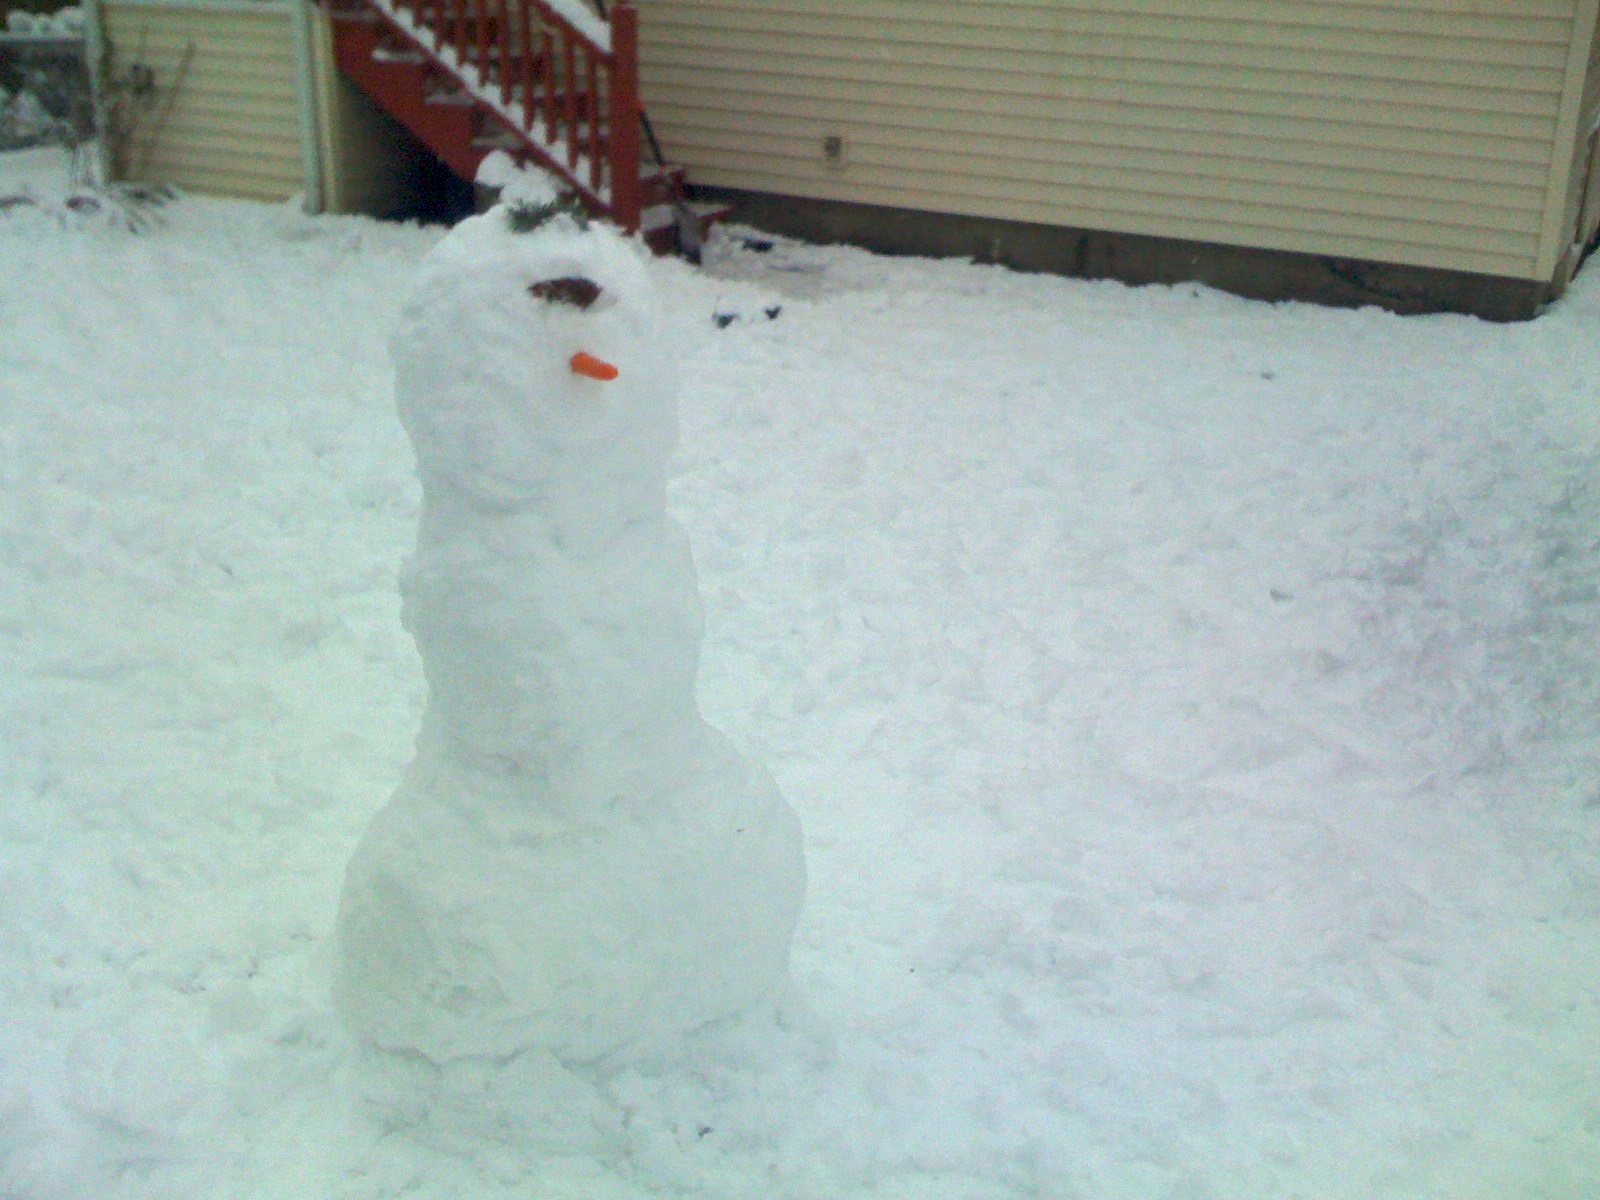 The biggest snowman EVAR!